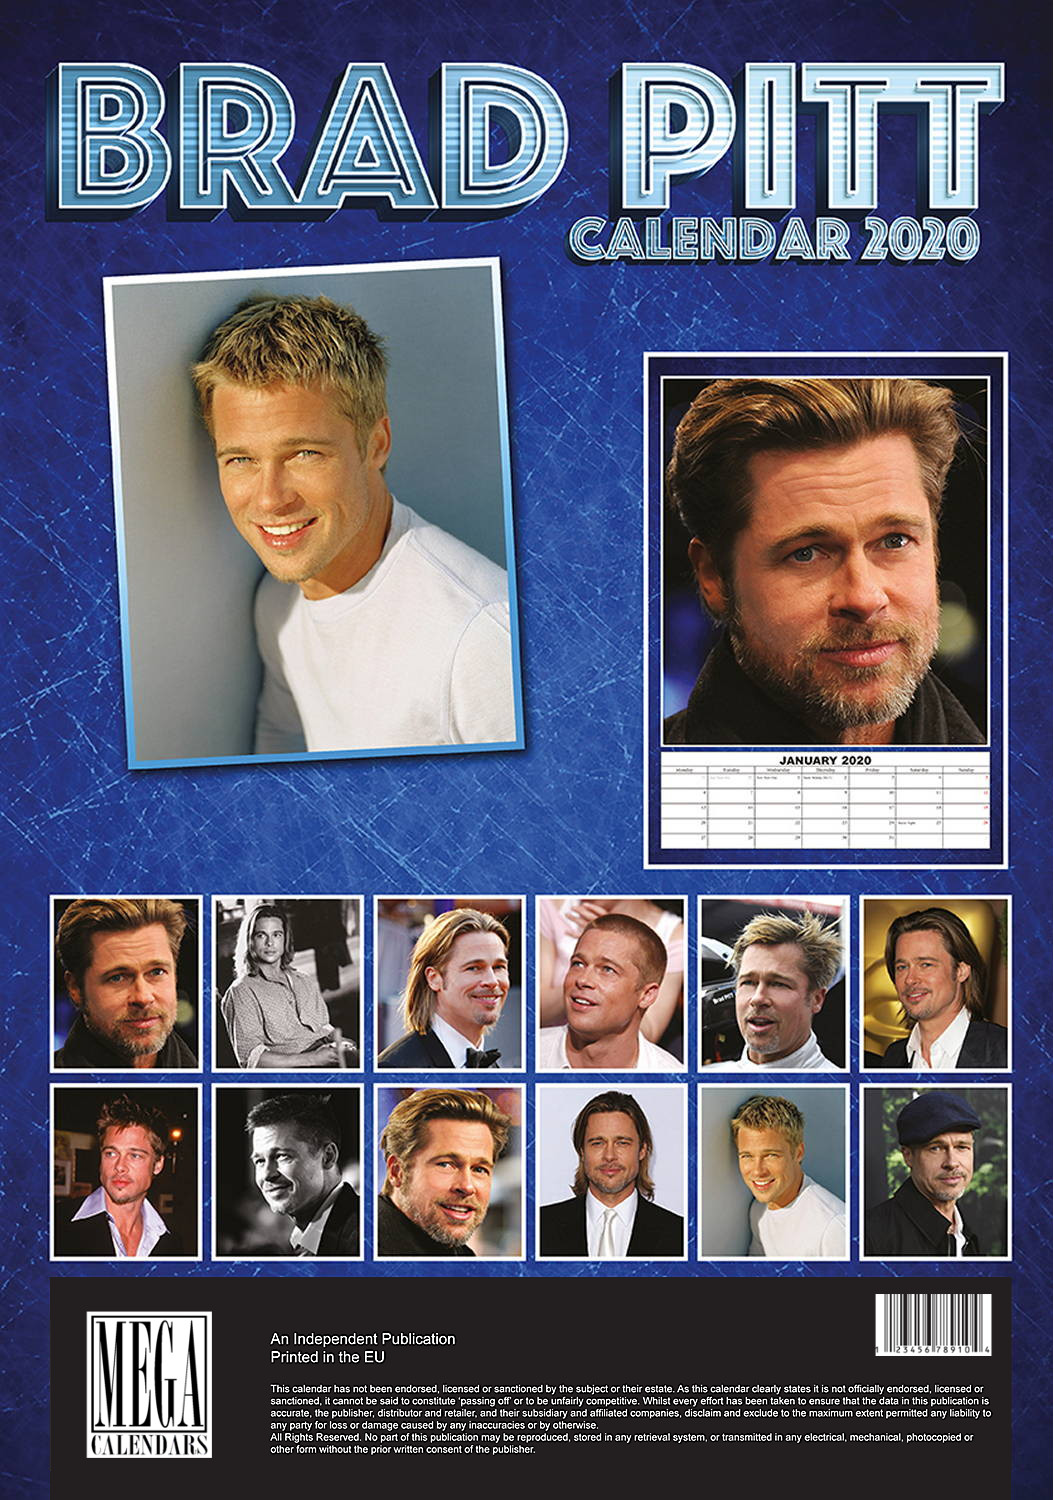 Brad Pitt Celebrity Wall Calendar 2020 eBay